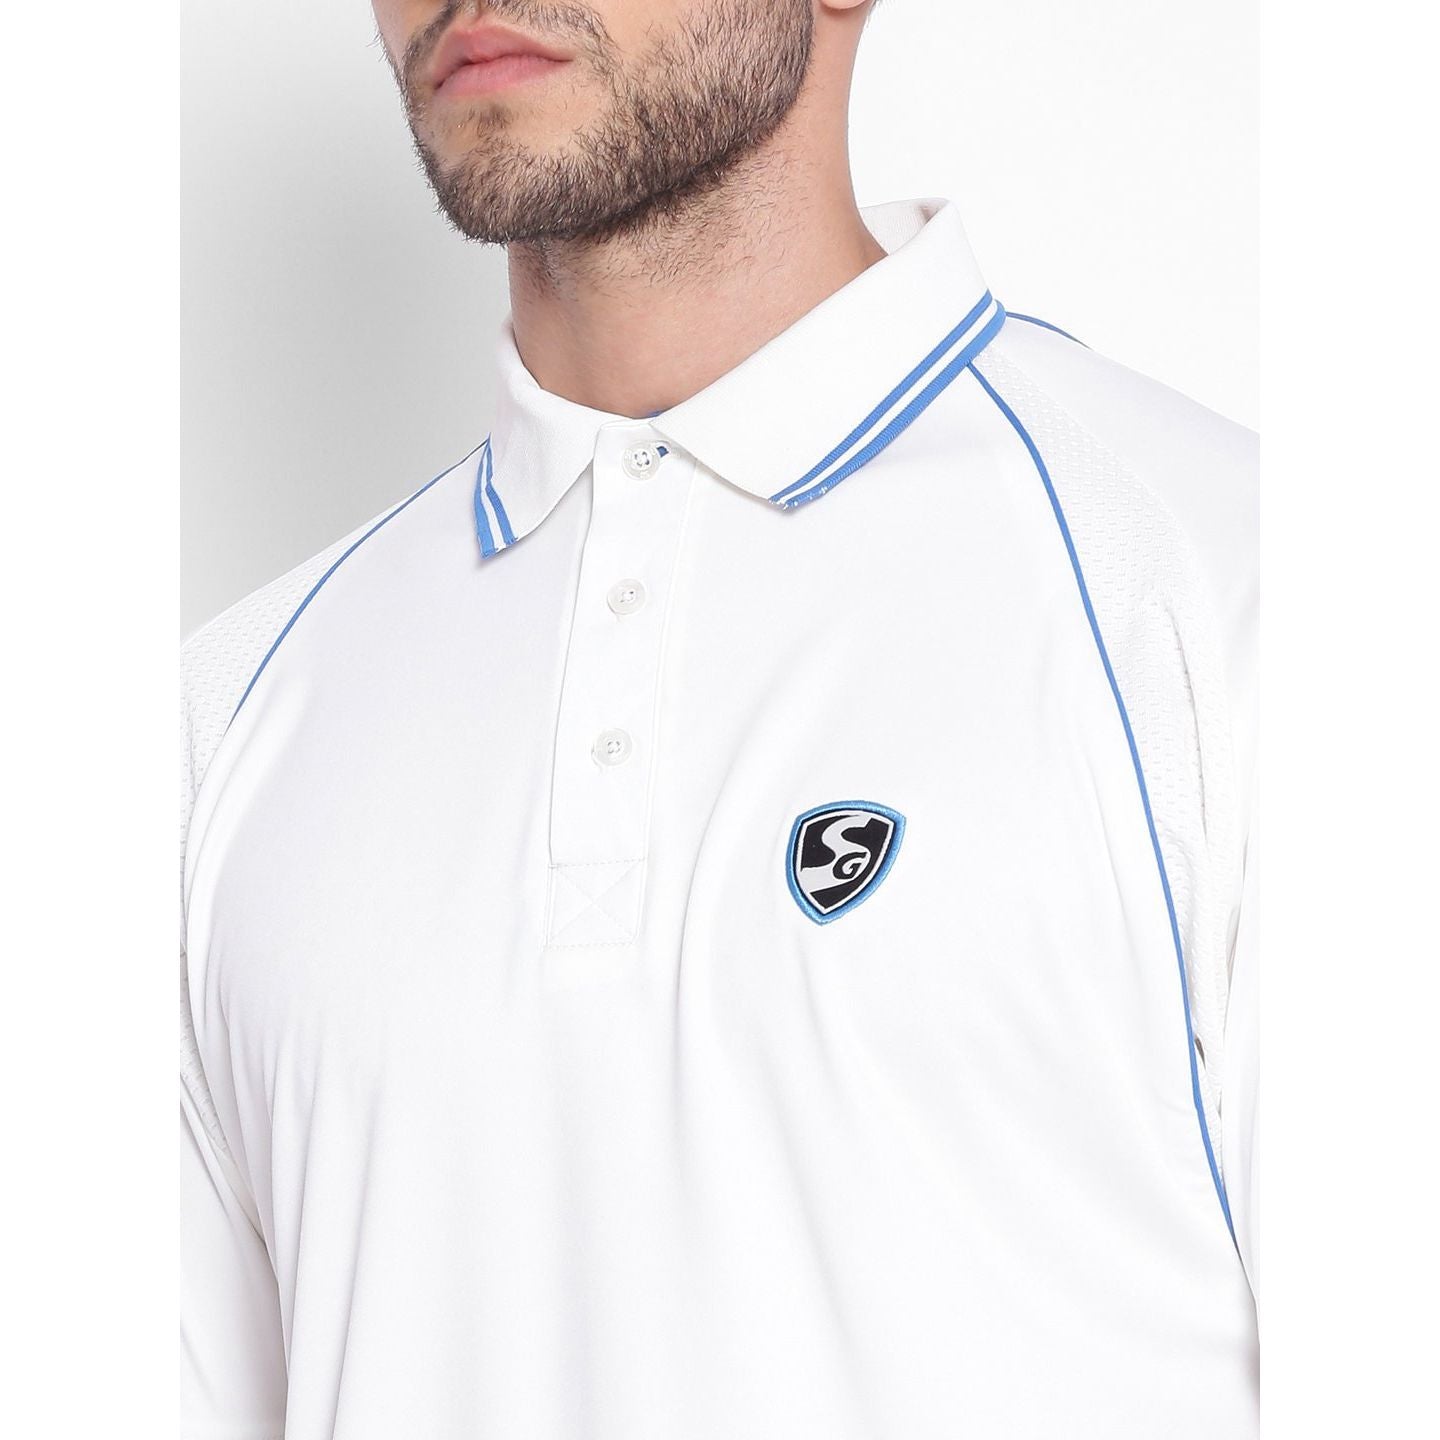 SG Premium 2.0 Half Sleeve Cricket Shirt Whites